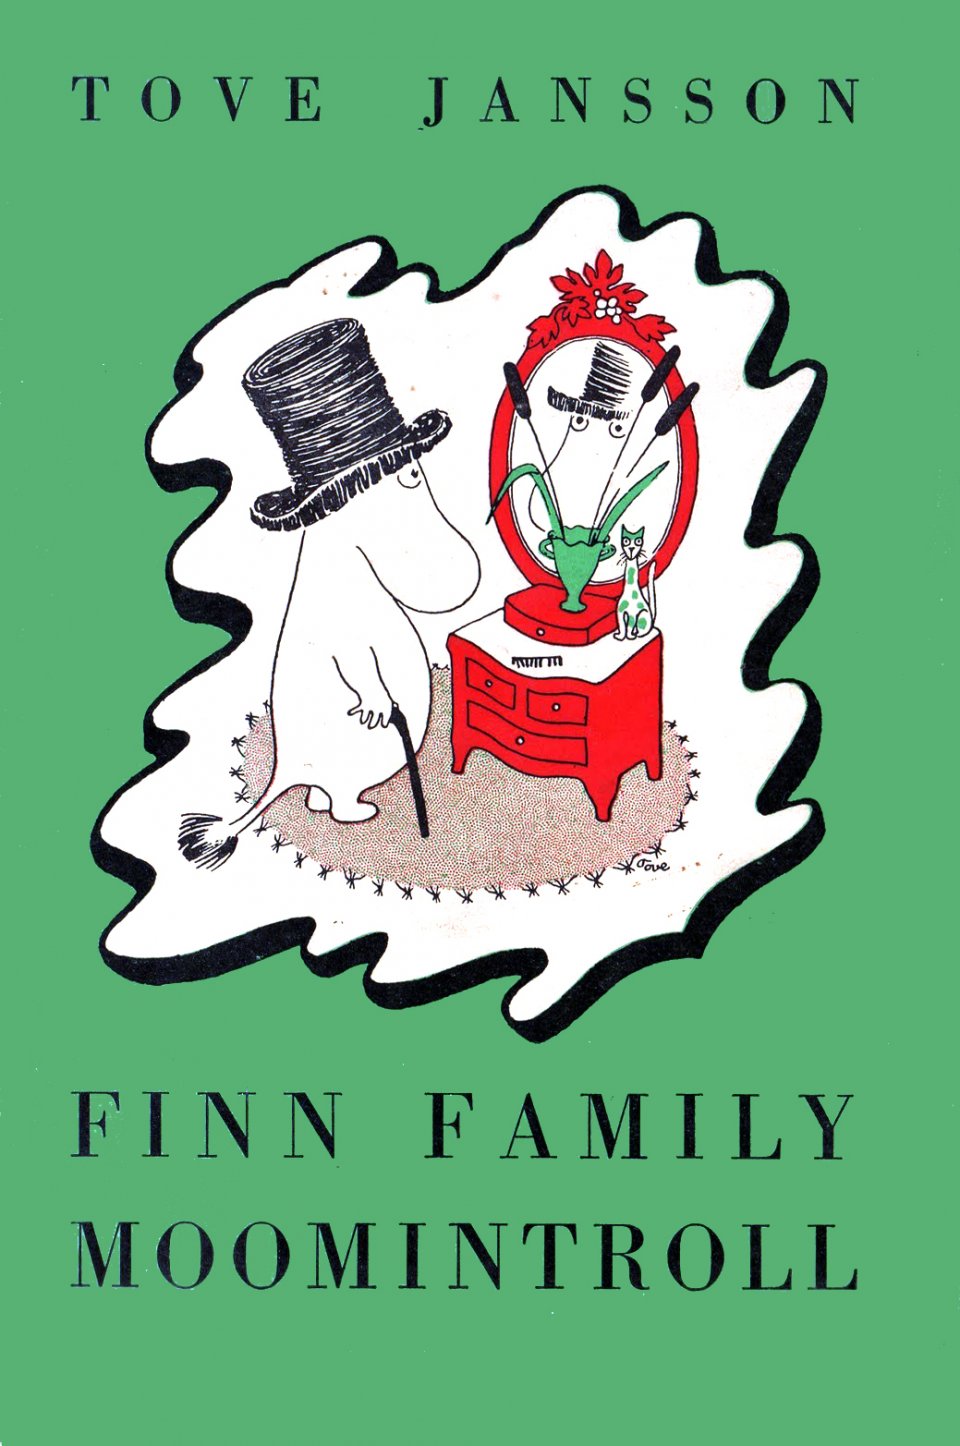 original Moomin book covers Finn Family Moomintroll original cover